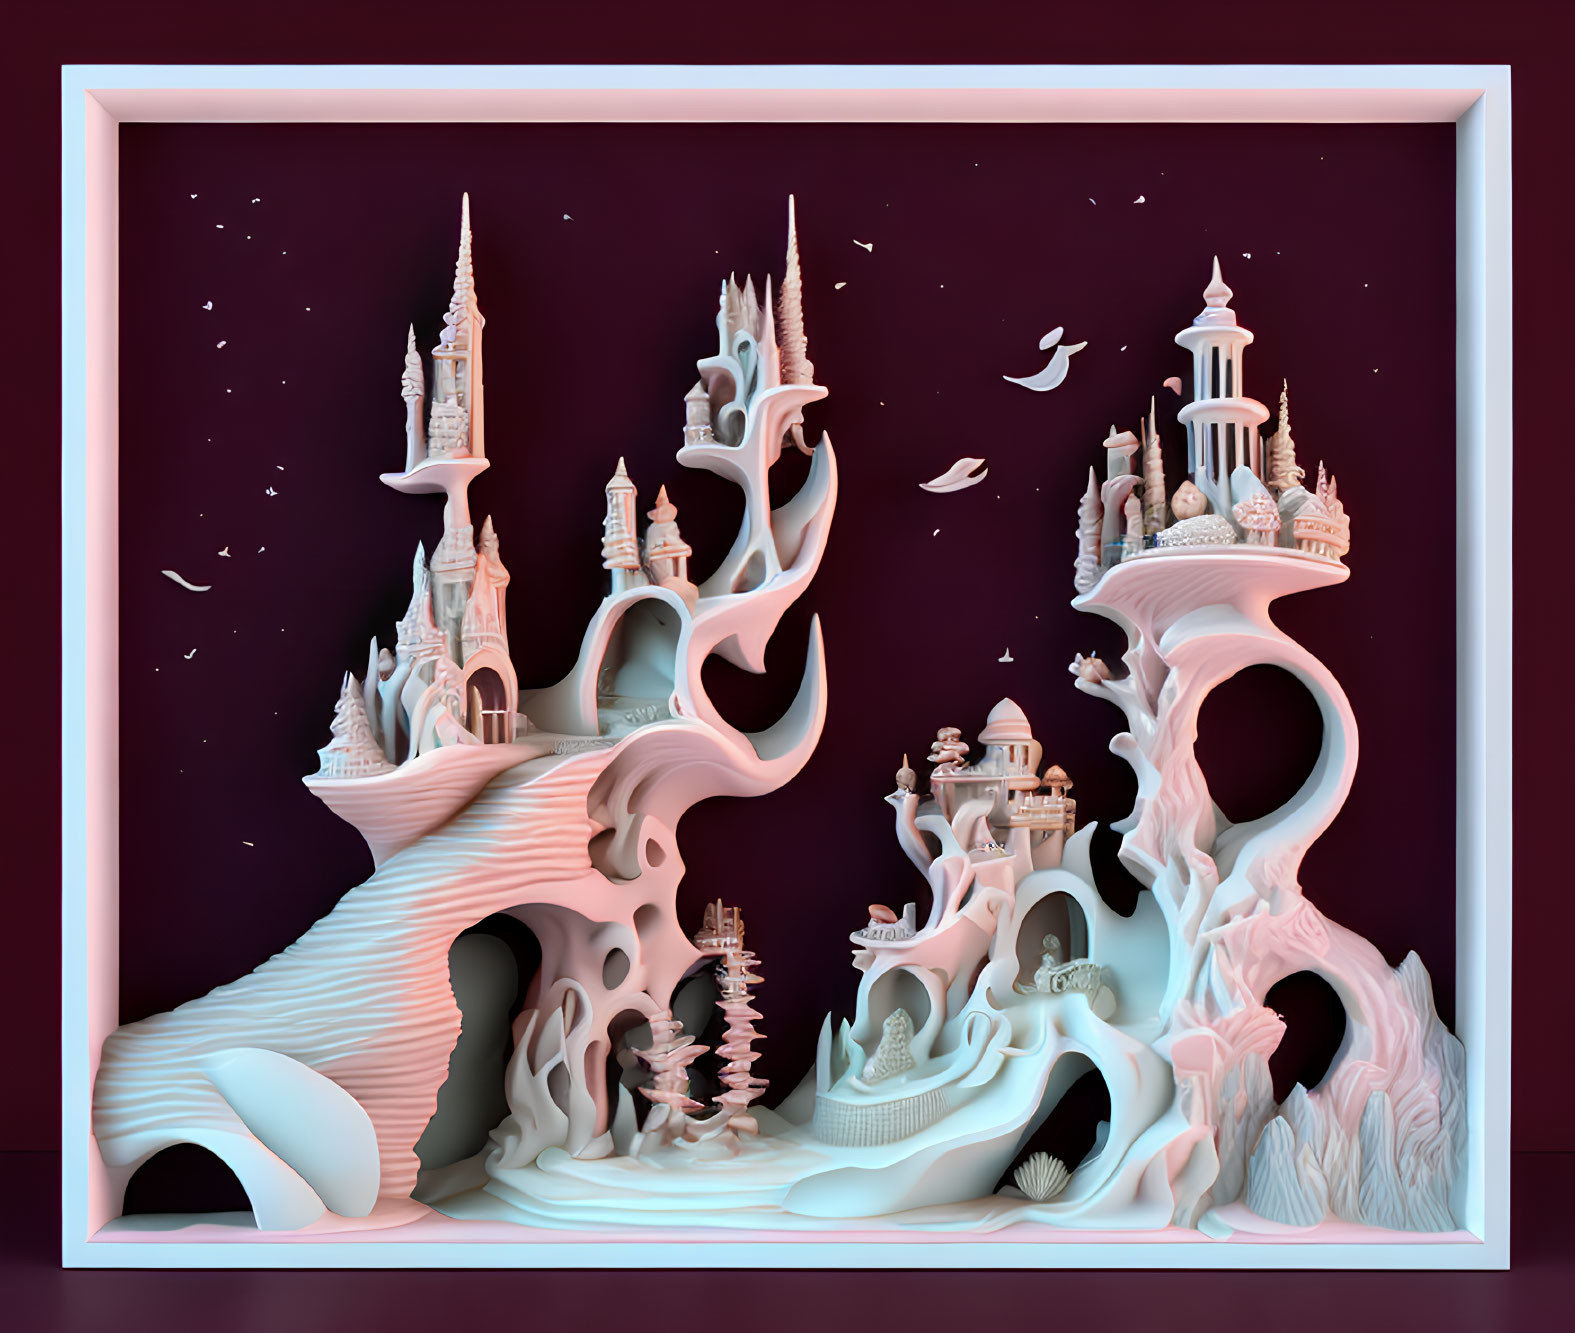 Fantasy 3D paper art diorama of white castles in a purple backdrop